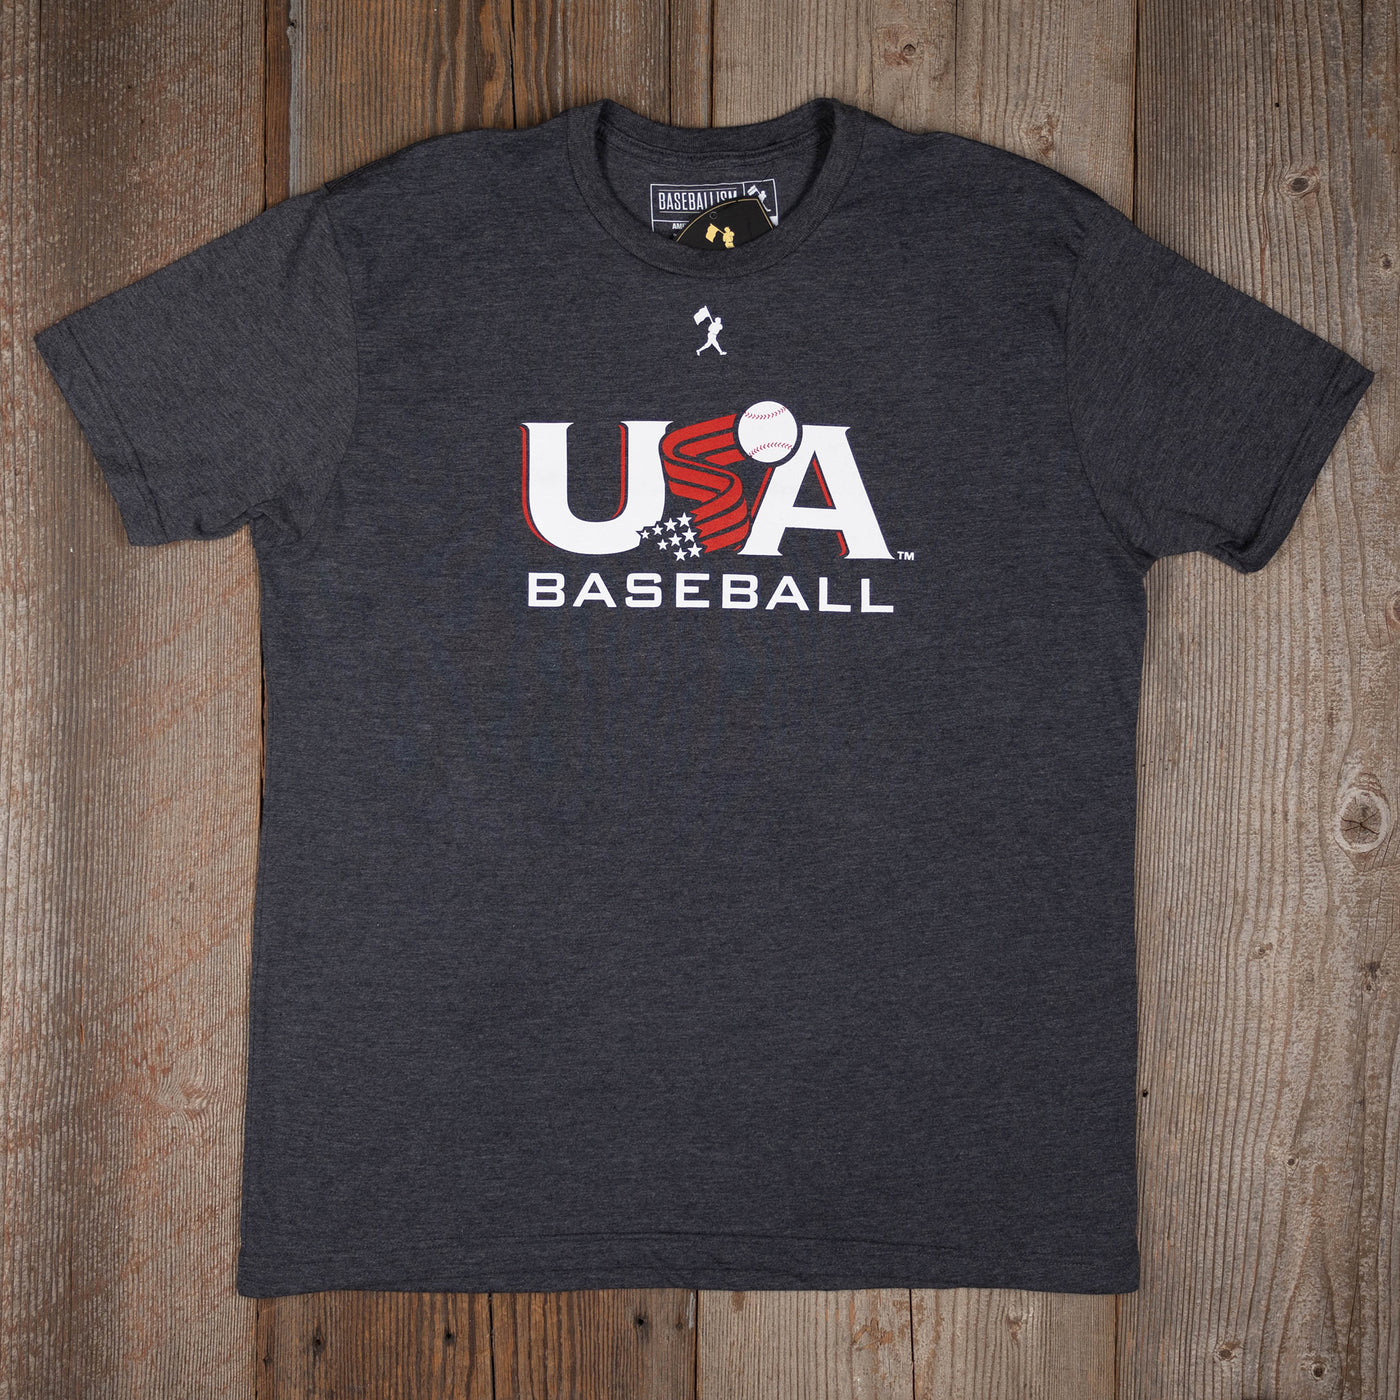 Baseballism x USA Baseball - Carbón 